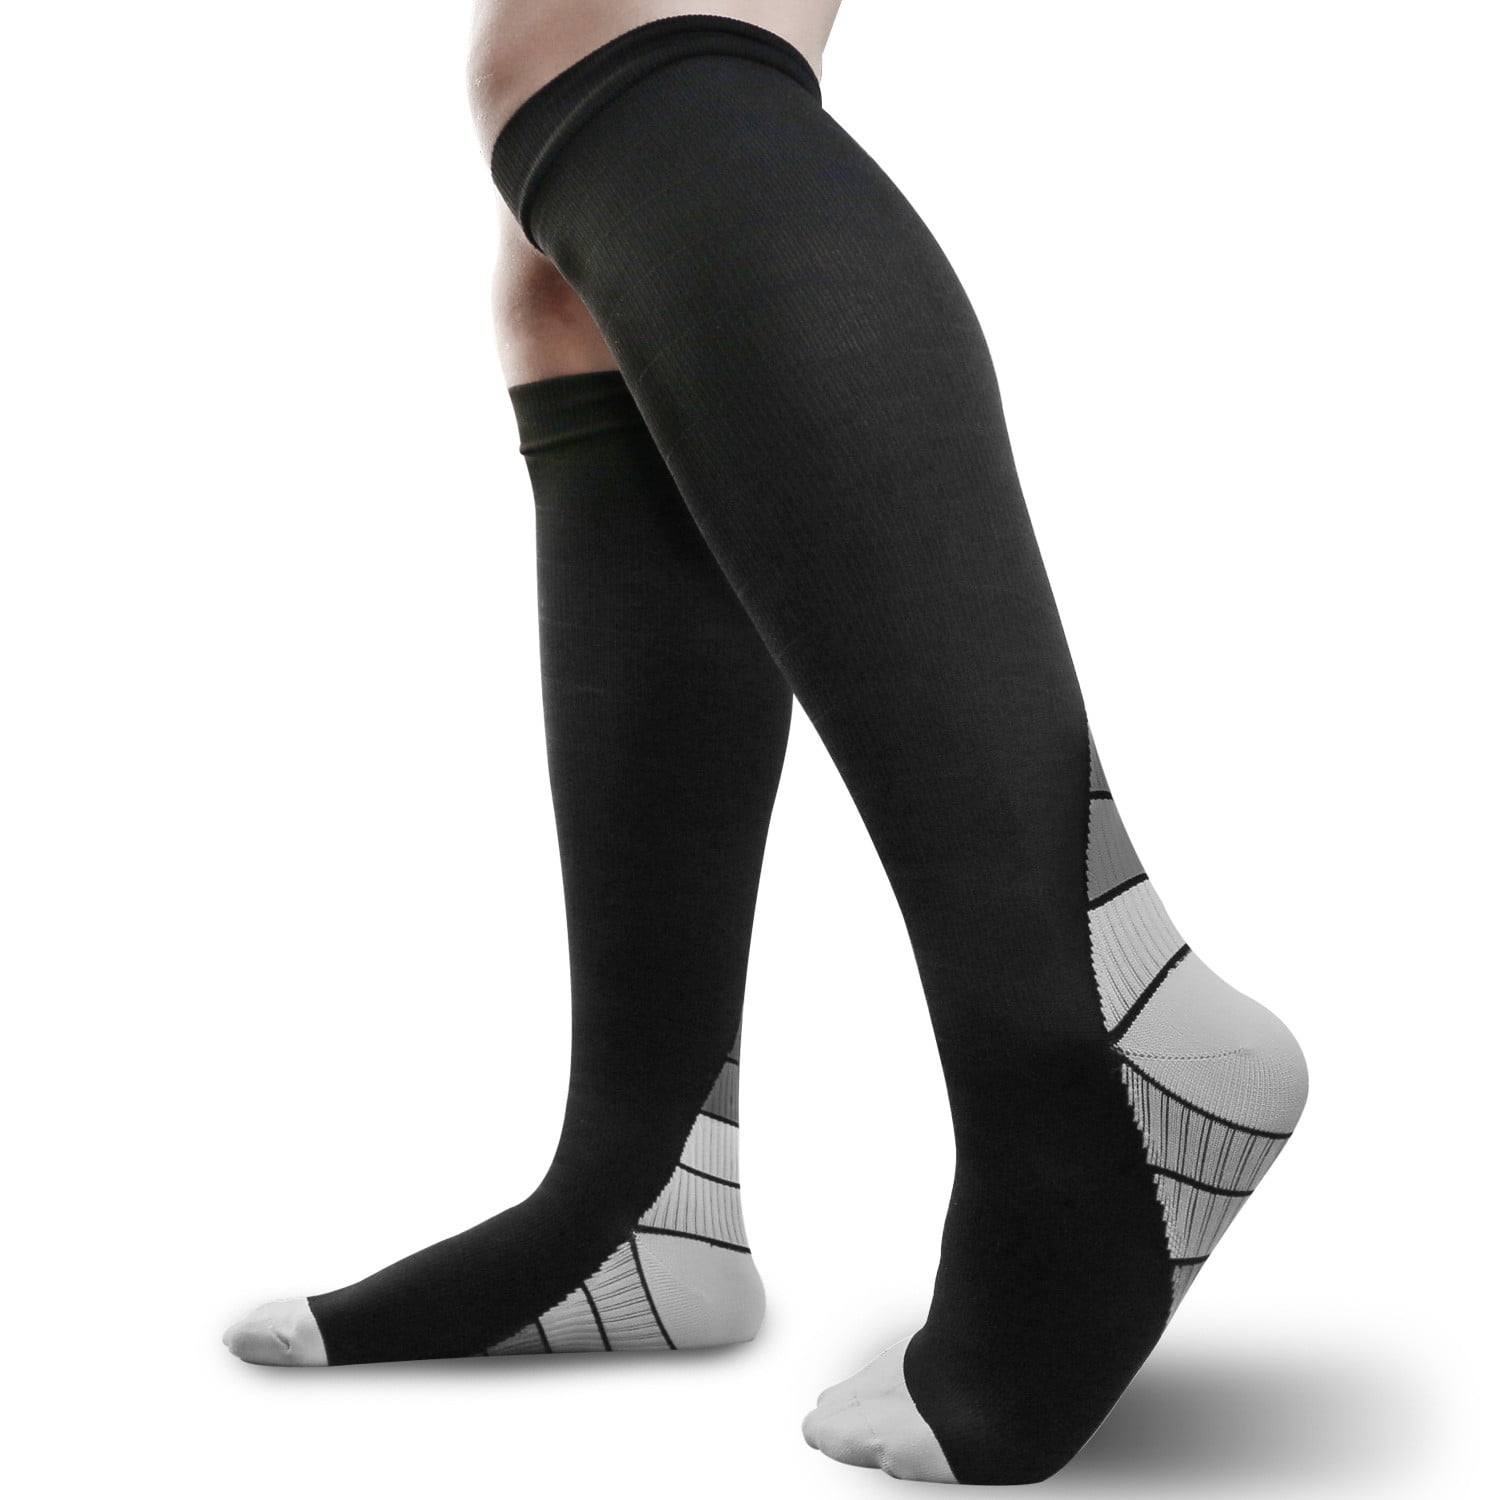 thigh high compression socks